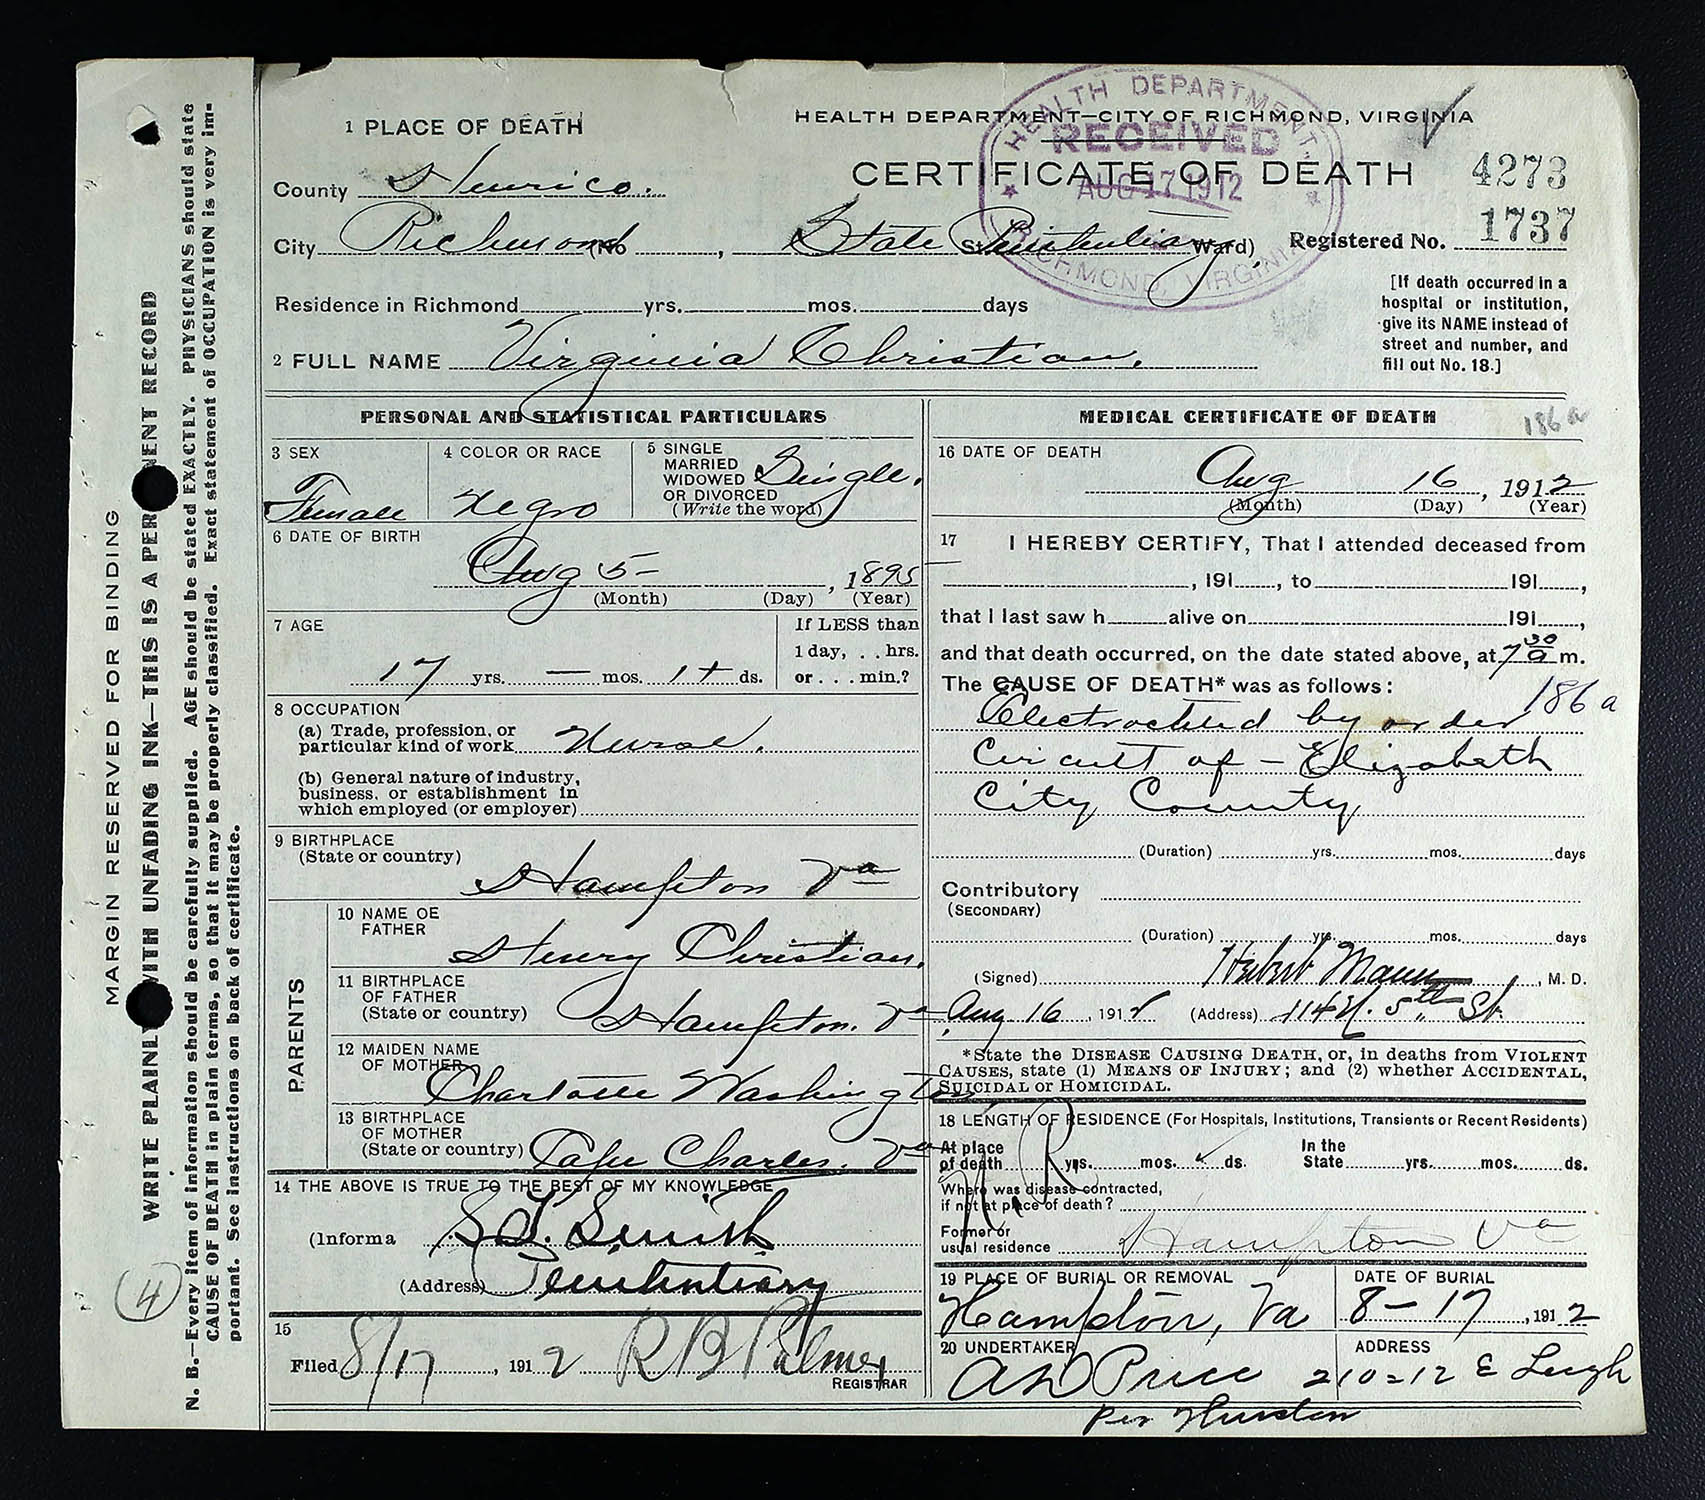 Death Certificate of Virginia Christian (died August 16 1912) · Online